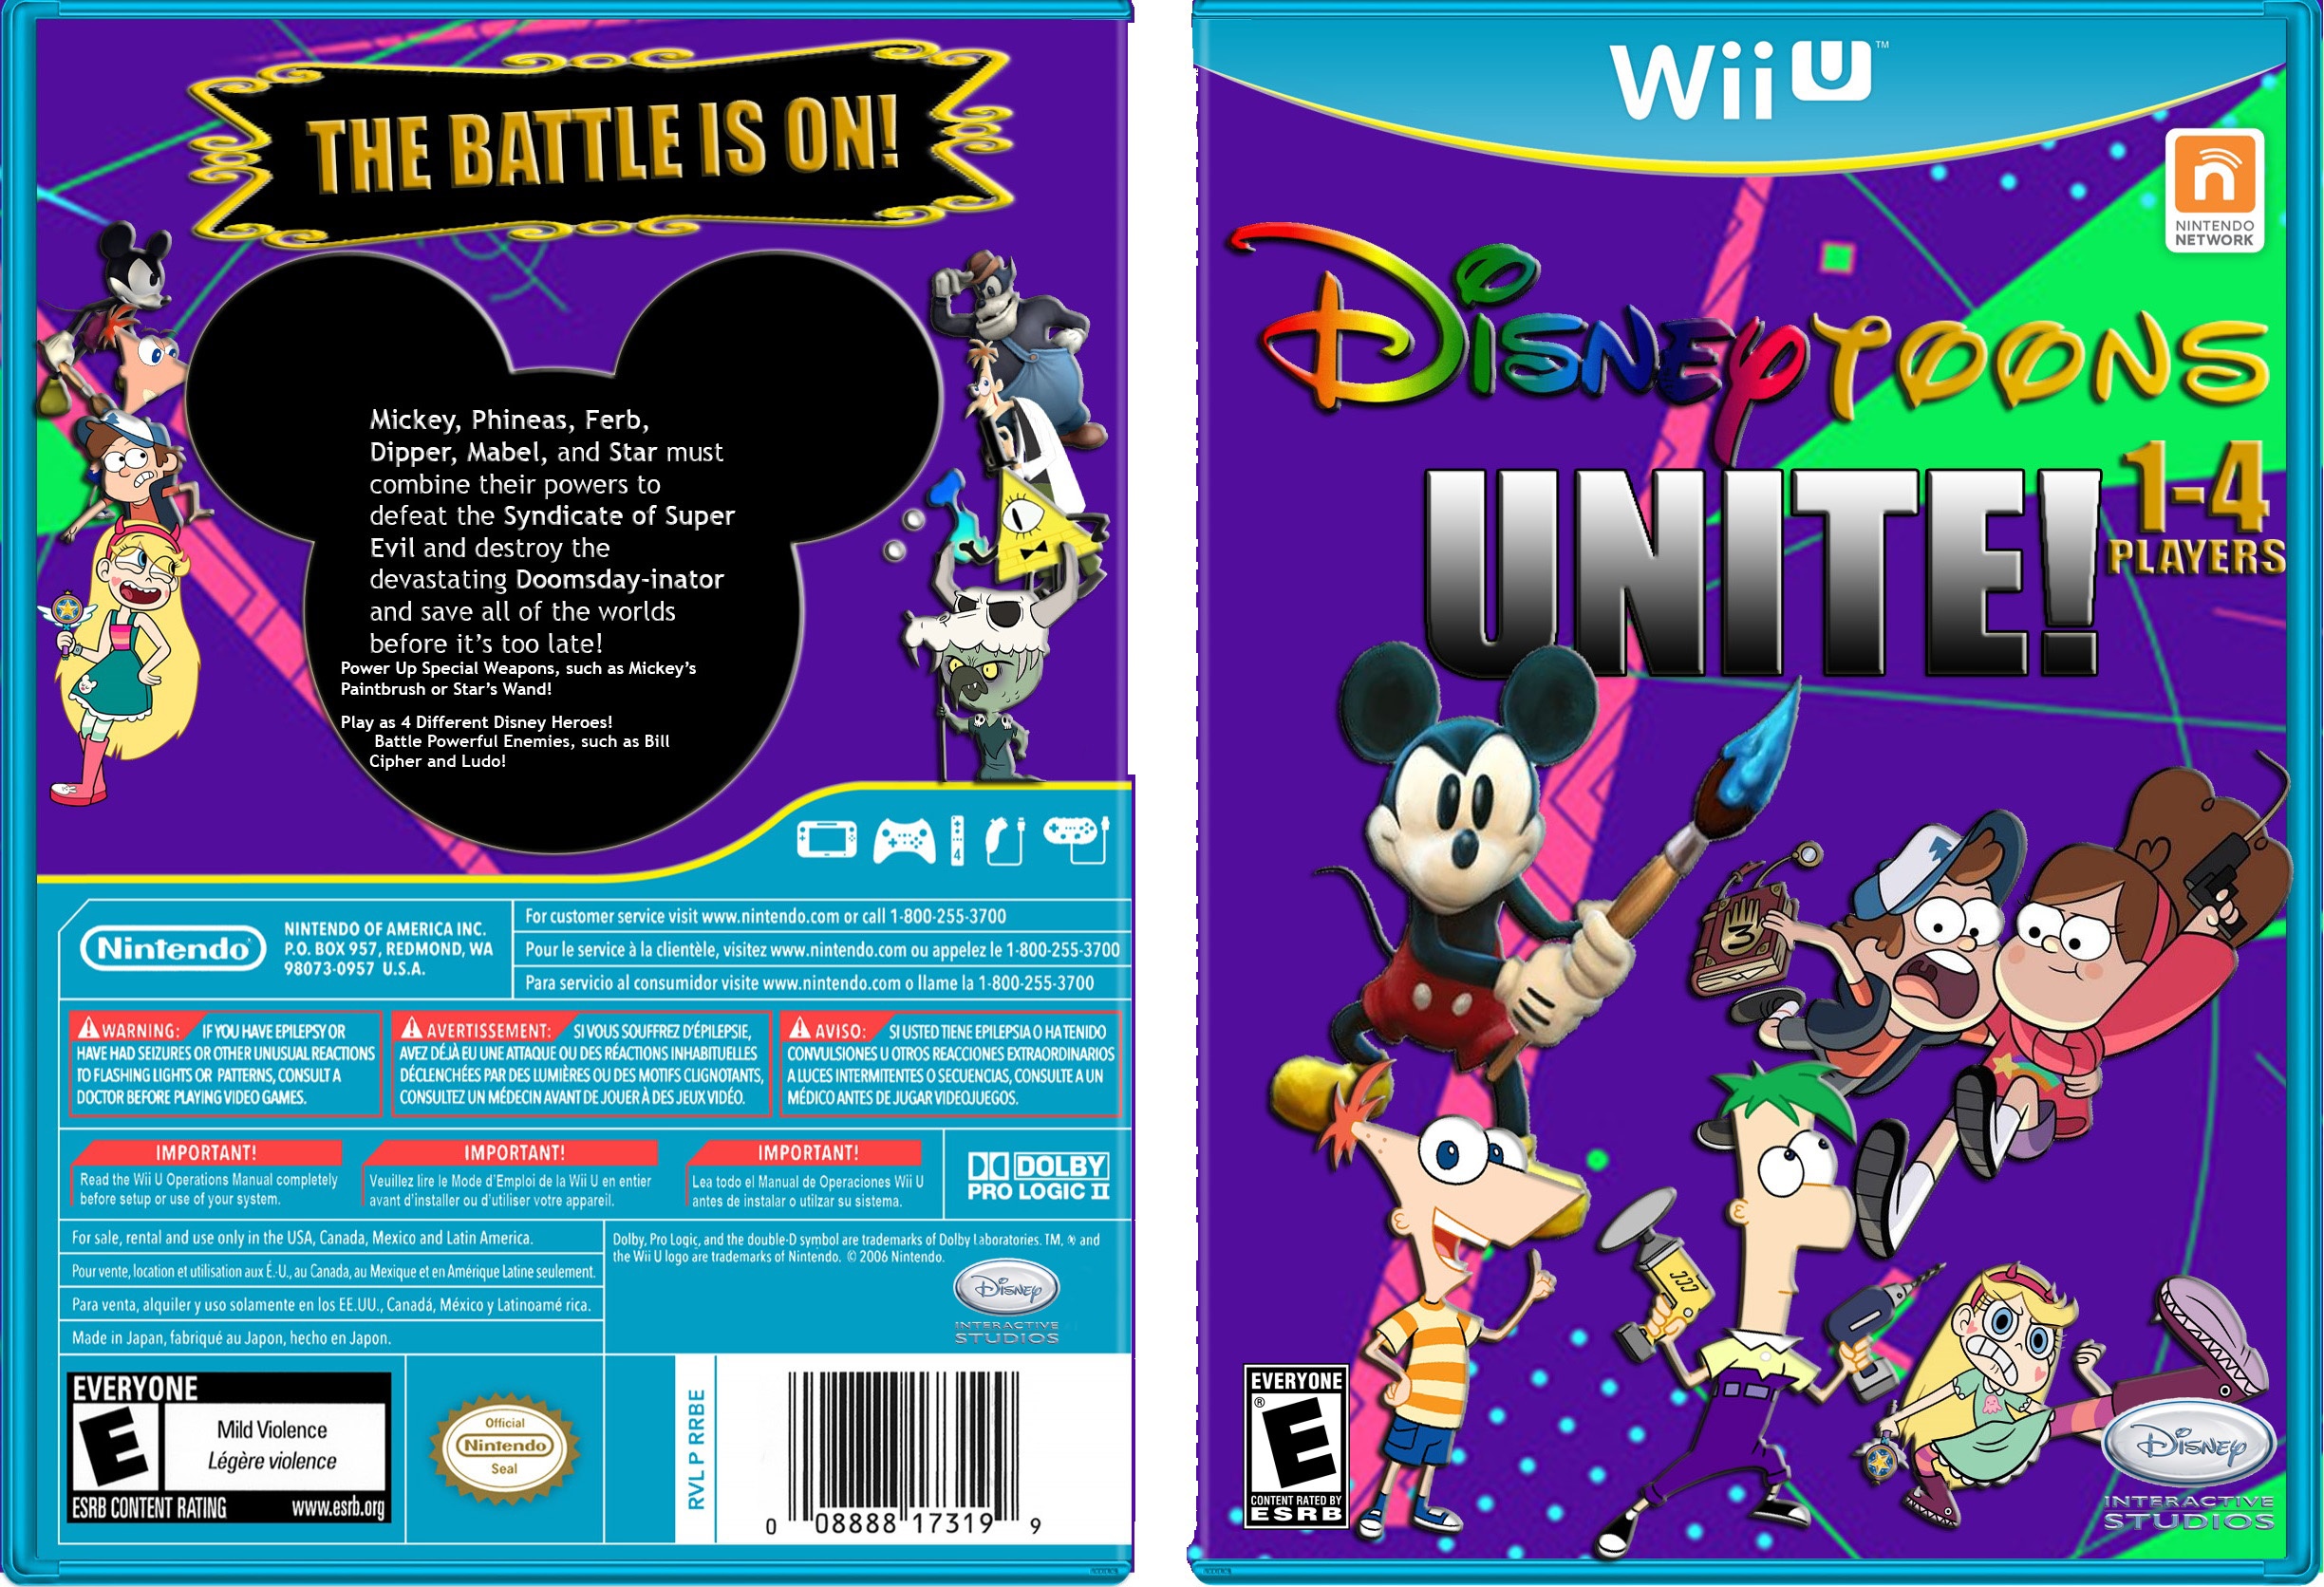 Disney Toons Unite! box cover